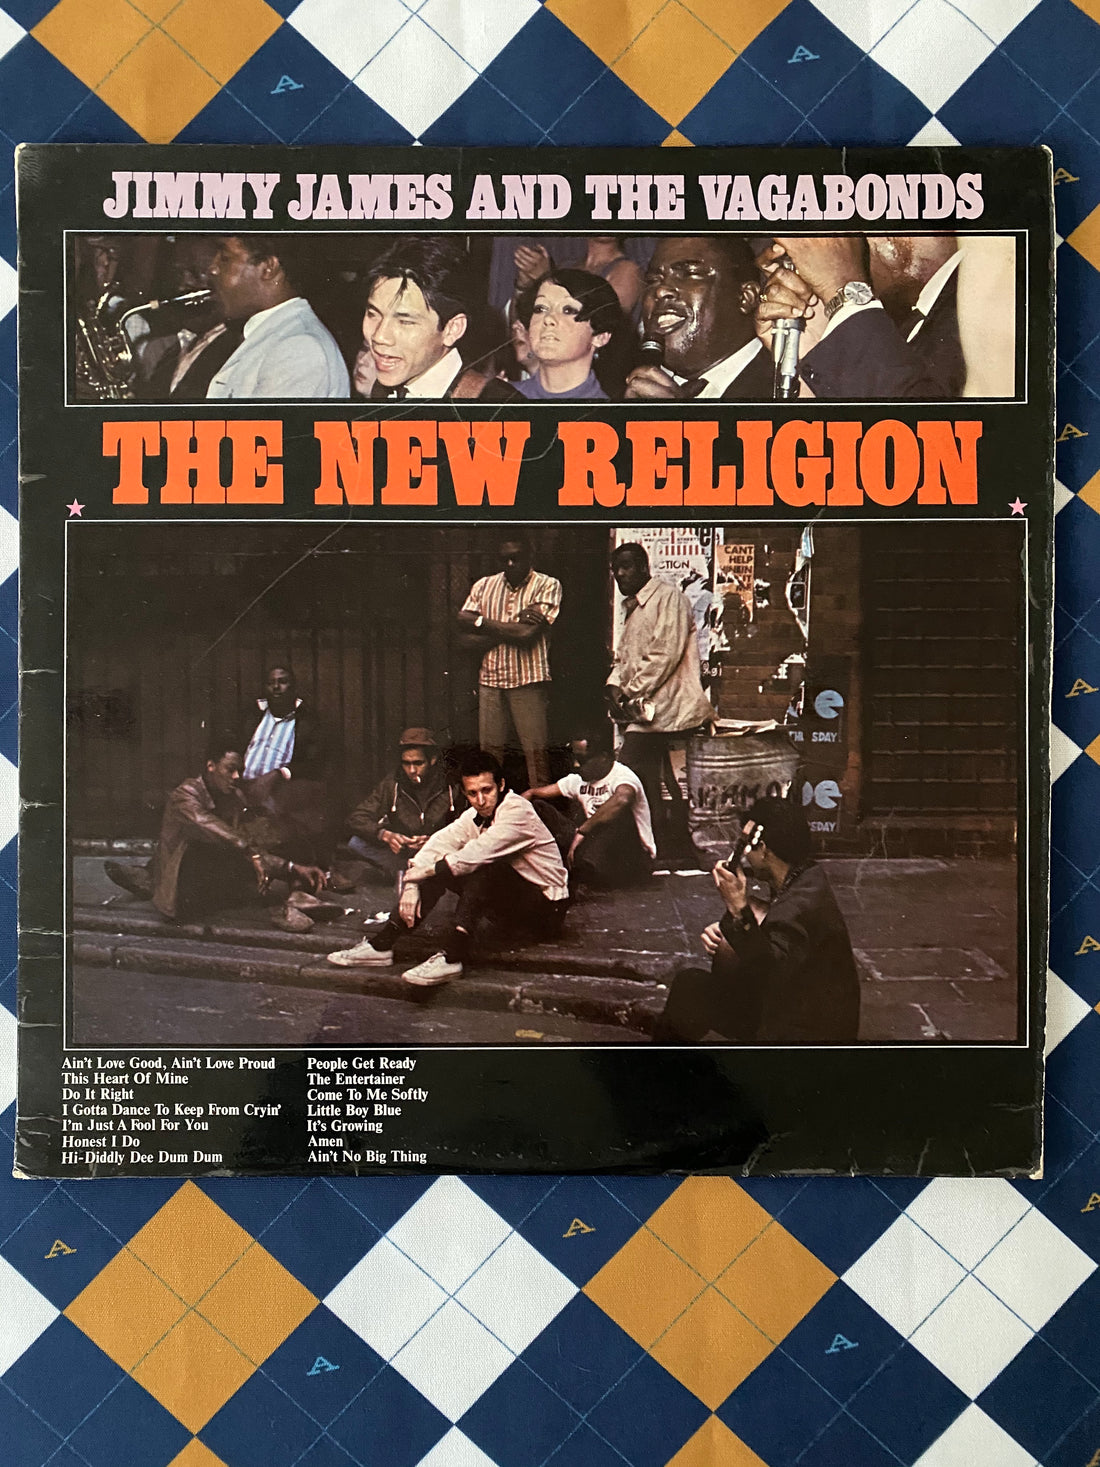 The New Religion - Live Album sleeve notes 1966